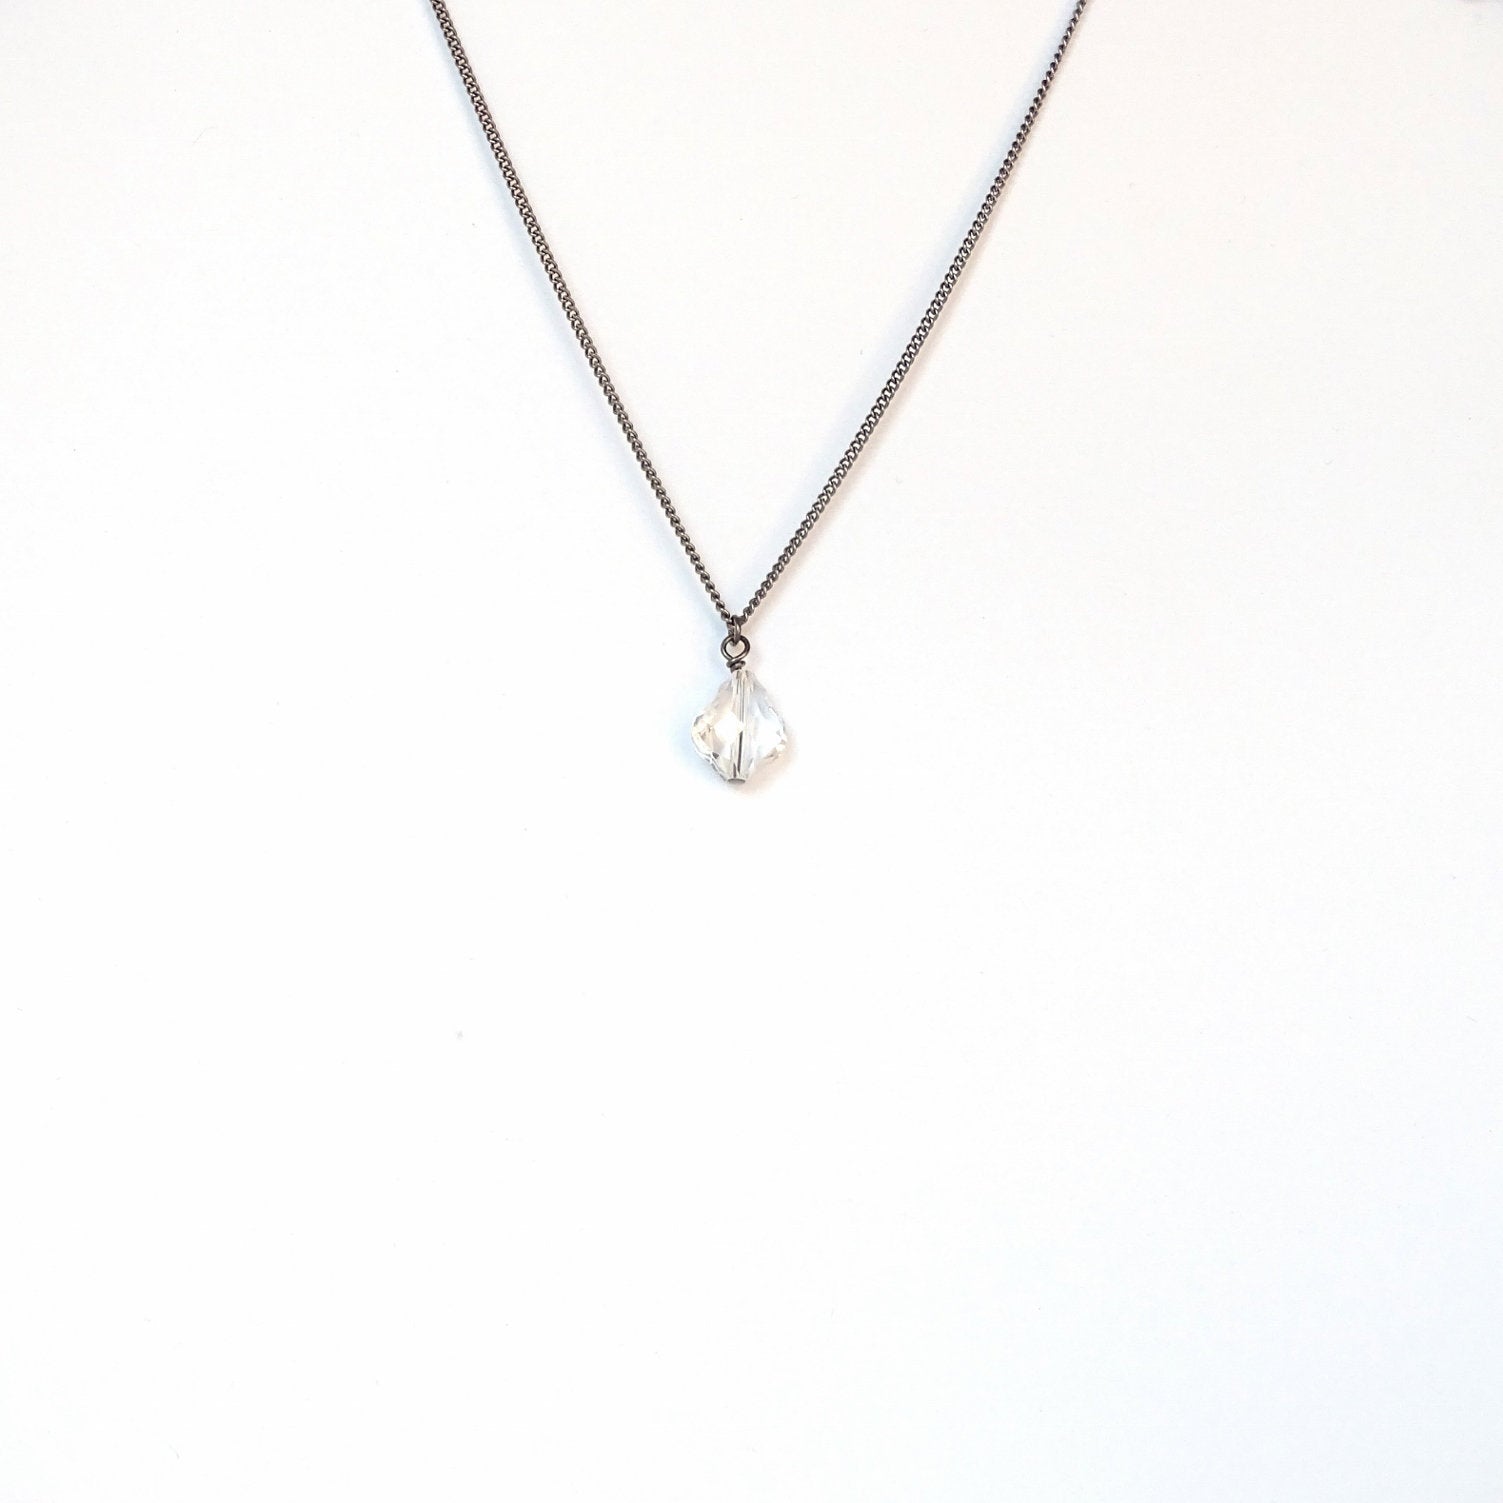 Clear Baroque Crystal Titanium Necklace, Nickel Free Necklace For Sensitive Skin, Swarovski Crystal Pure Titanium Jewelry